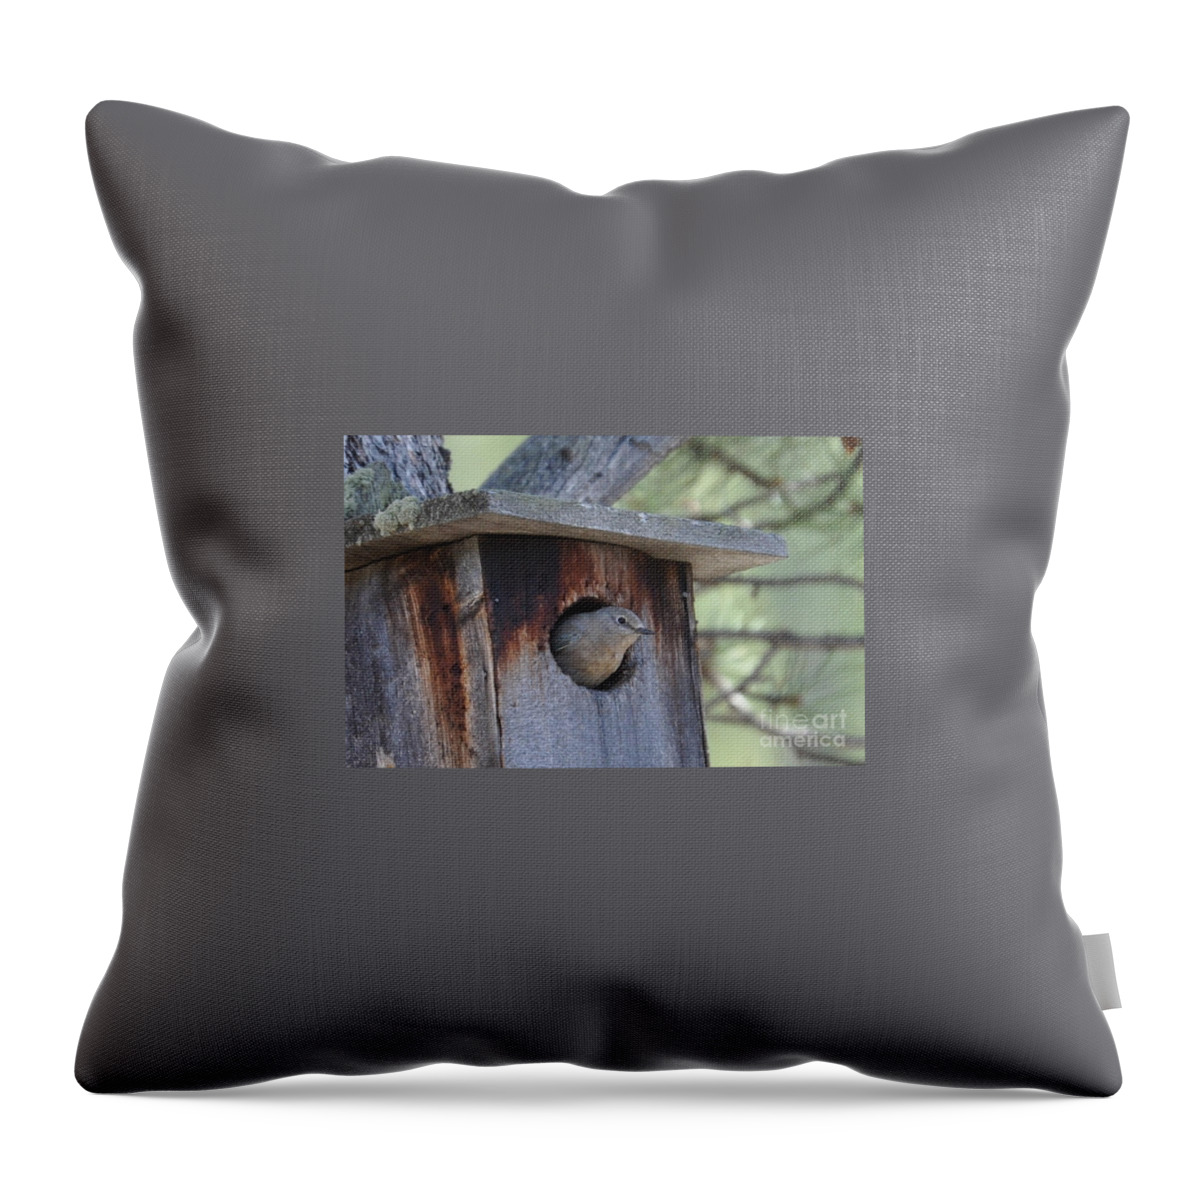 Bird Throw Pillow featuring the photograph She's Home by Dorrene BrownButterfield